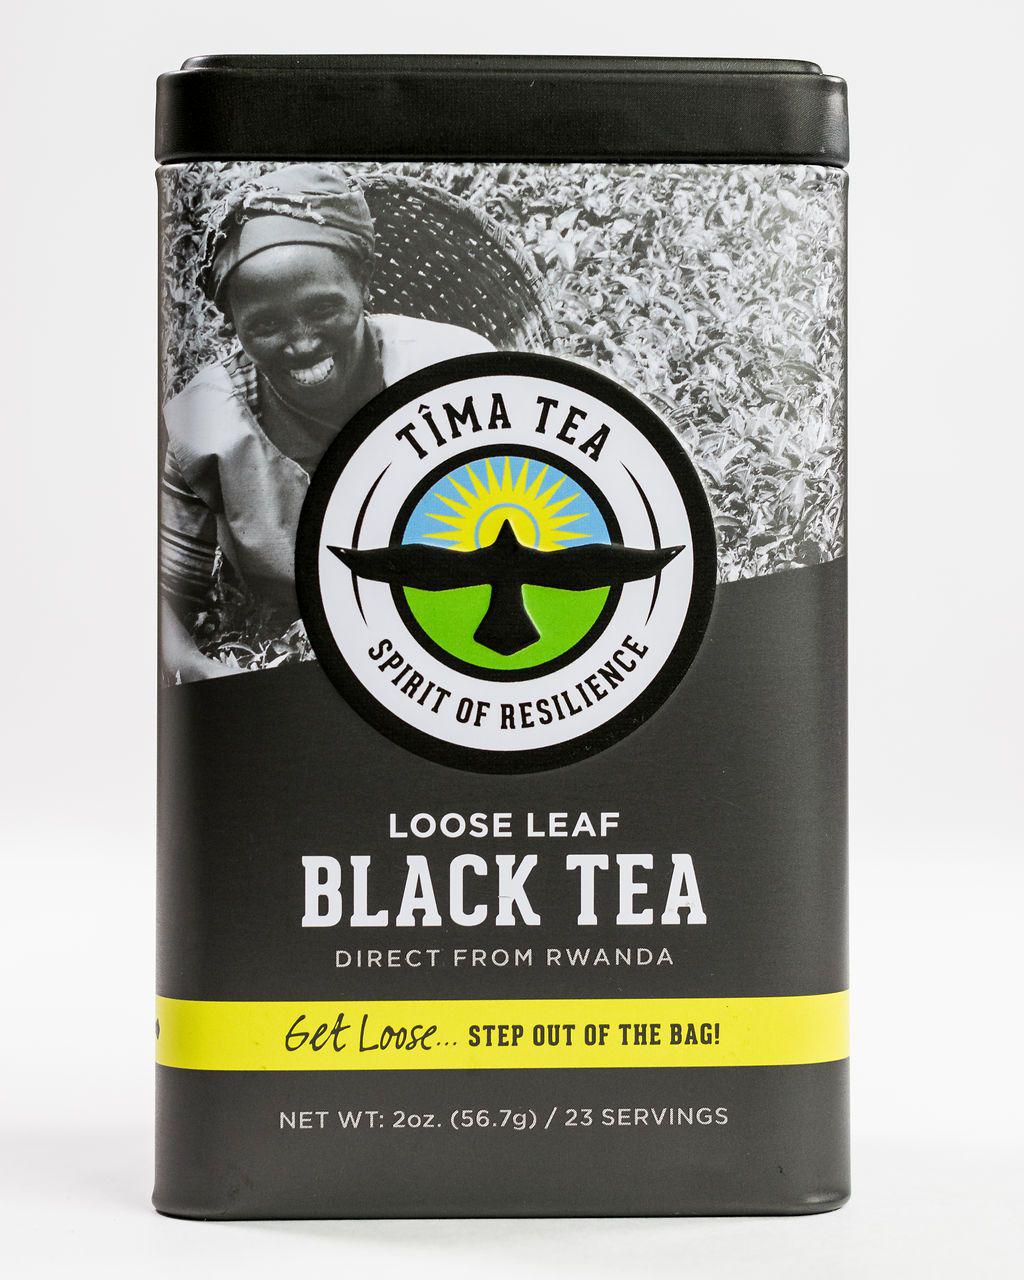 Organic Black Tea